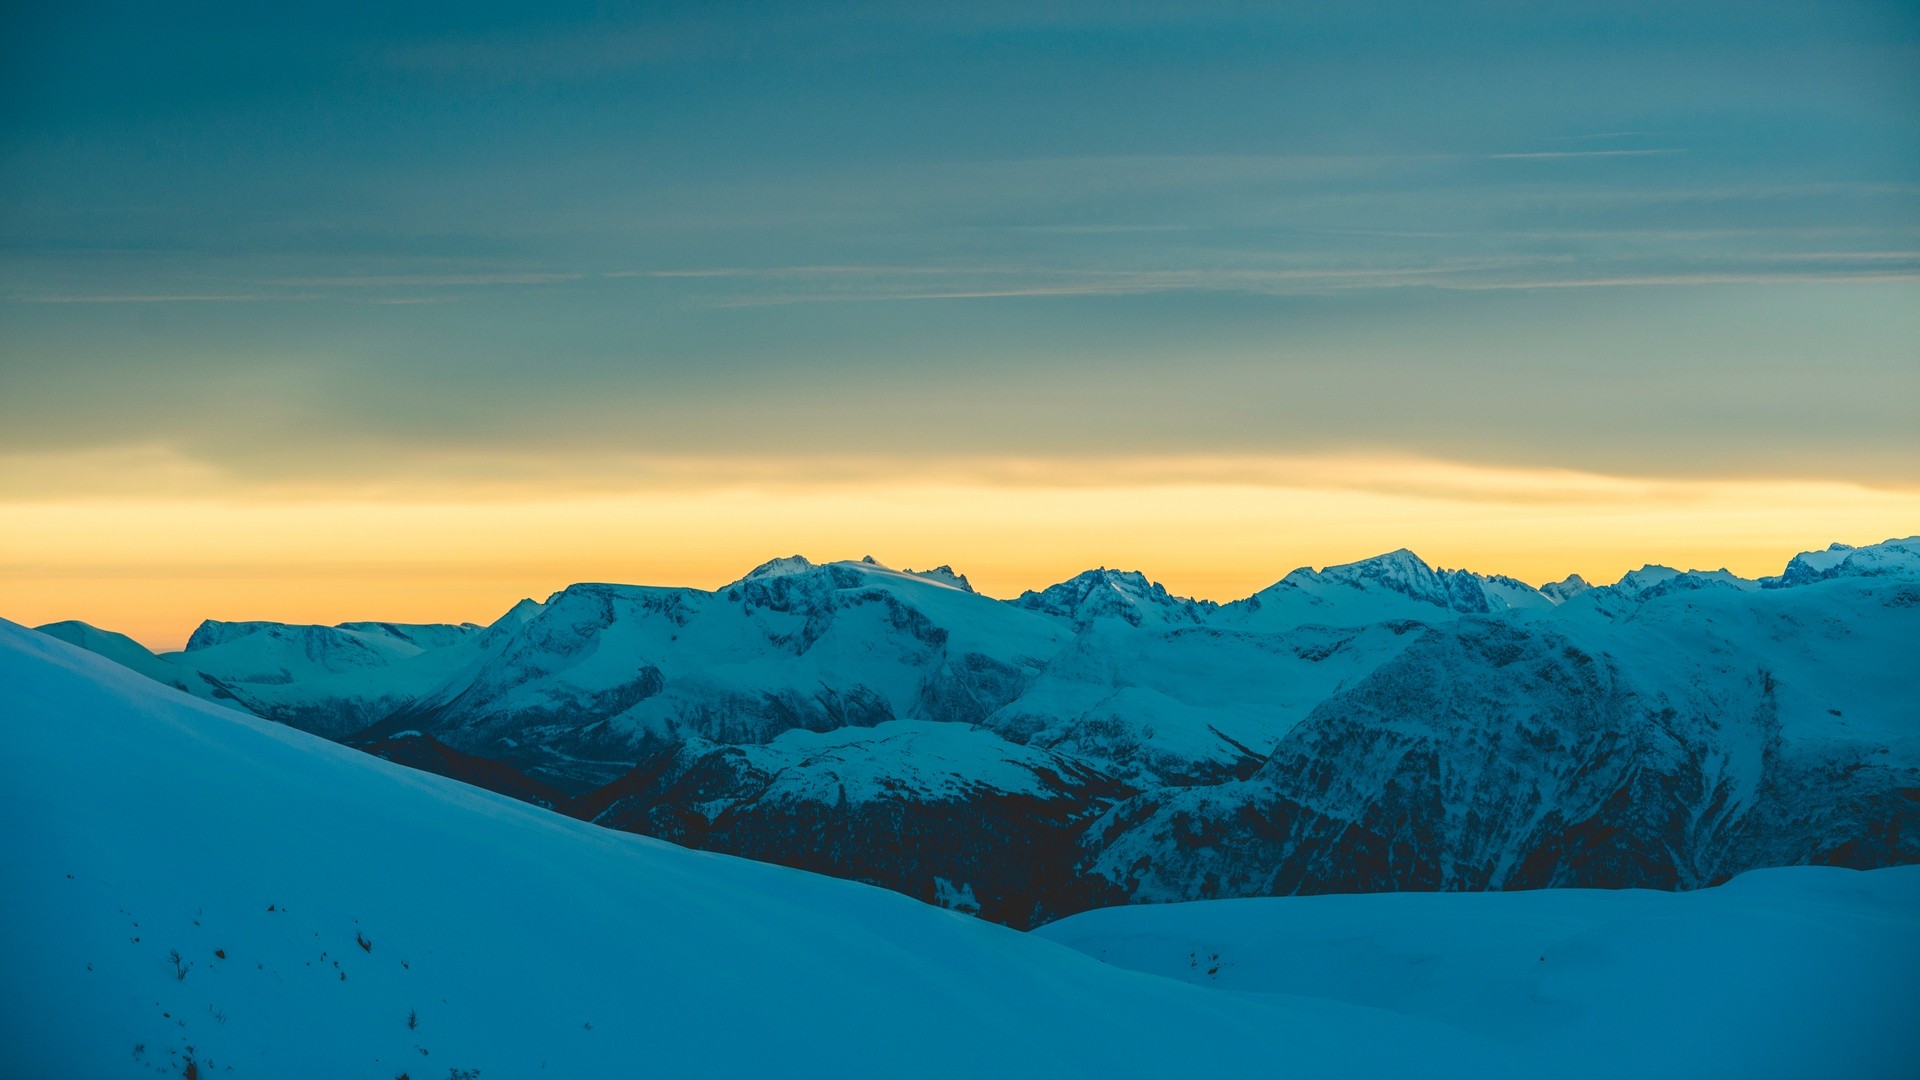 1920x1080 wallpapers: mountains, snow, sunset, horizon, snowy (image)